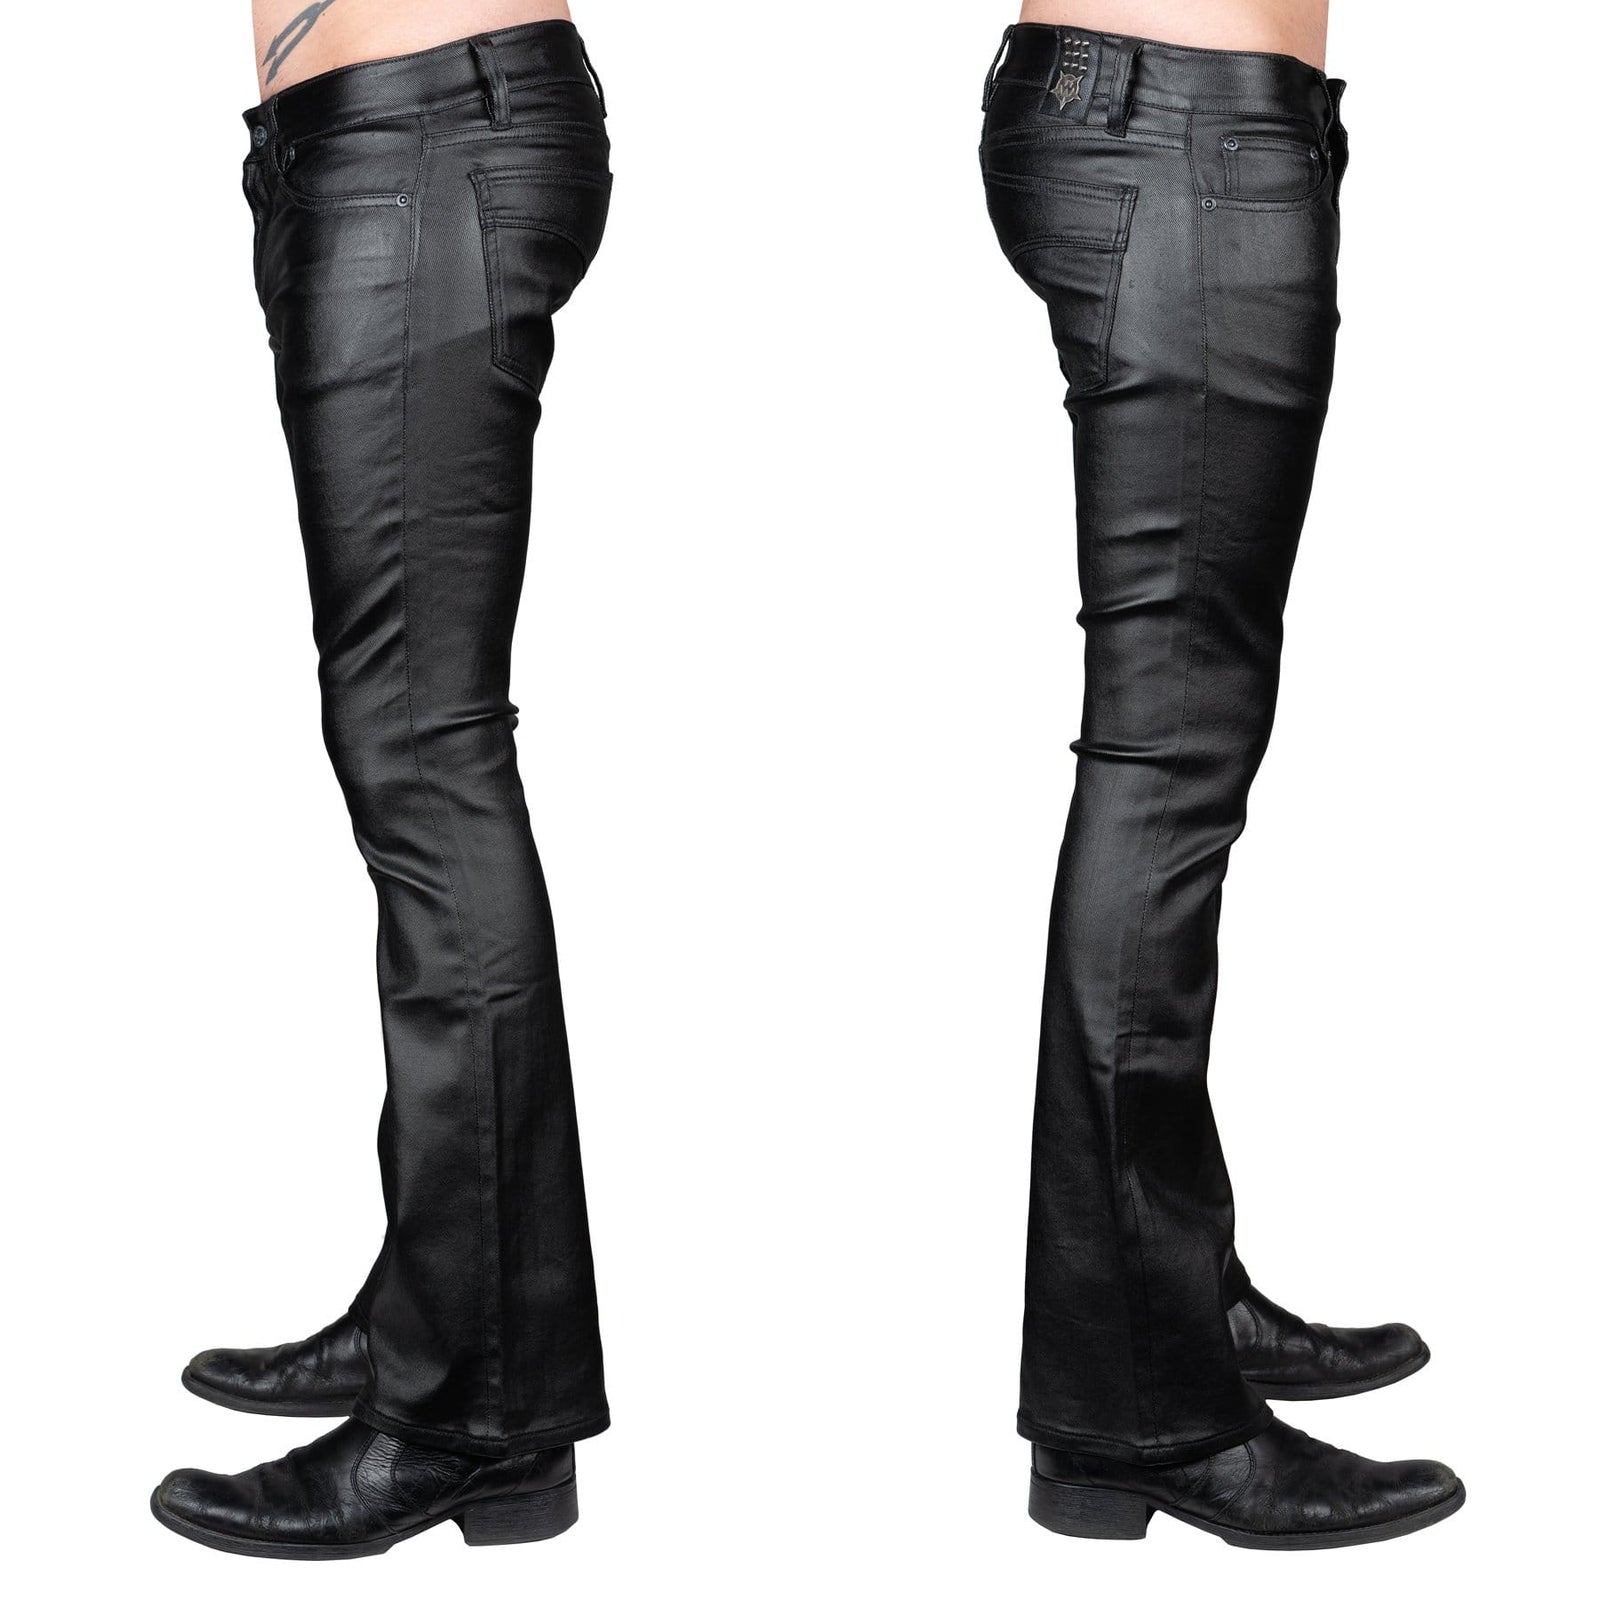 Wornstar Clothing Hellraiser Side Zipper Unisex Jeans - Black